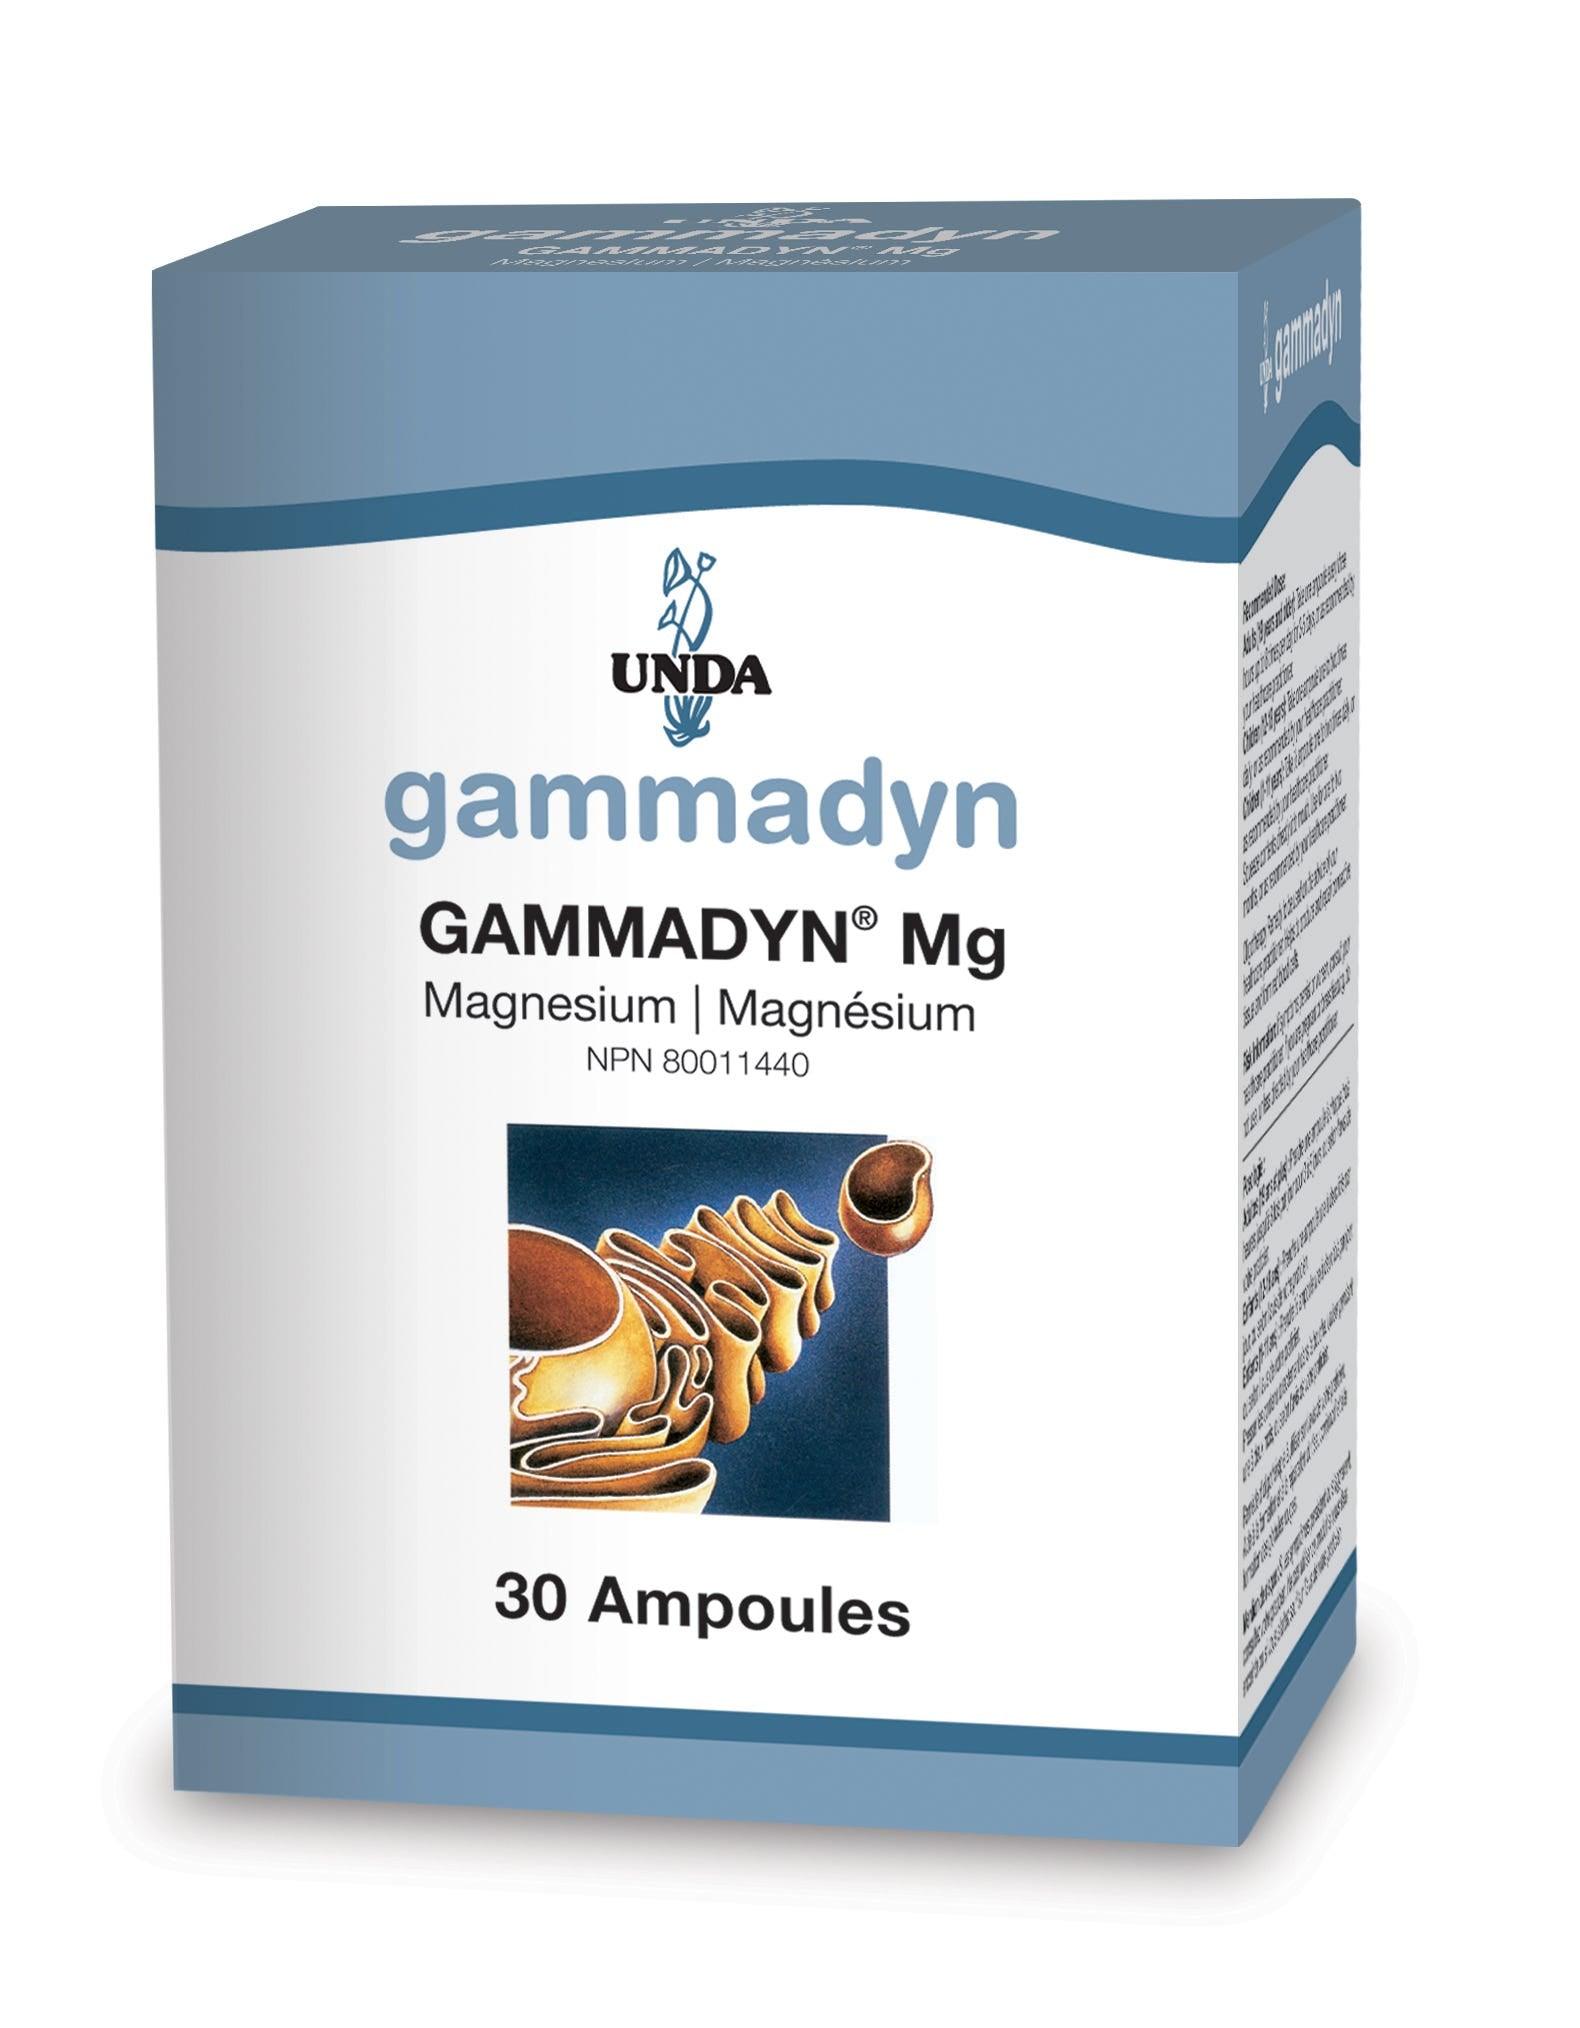 Unda Gammadyn Magnesium (Mg) - 30 ampoules